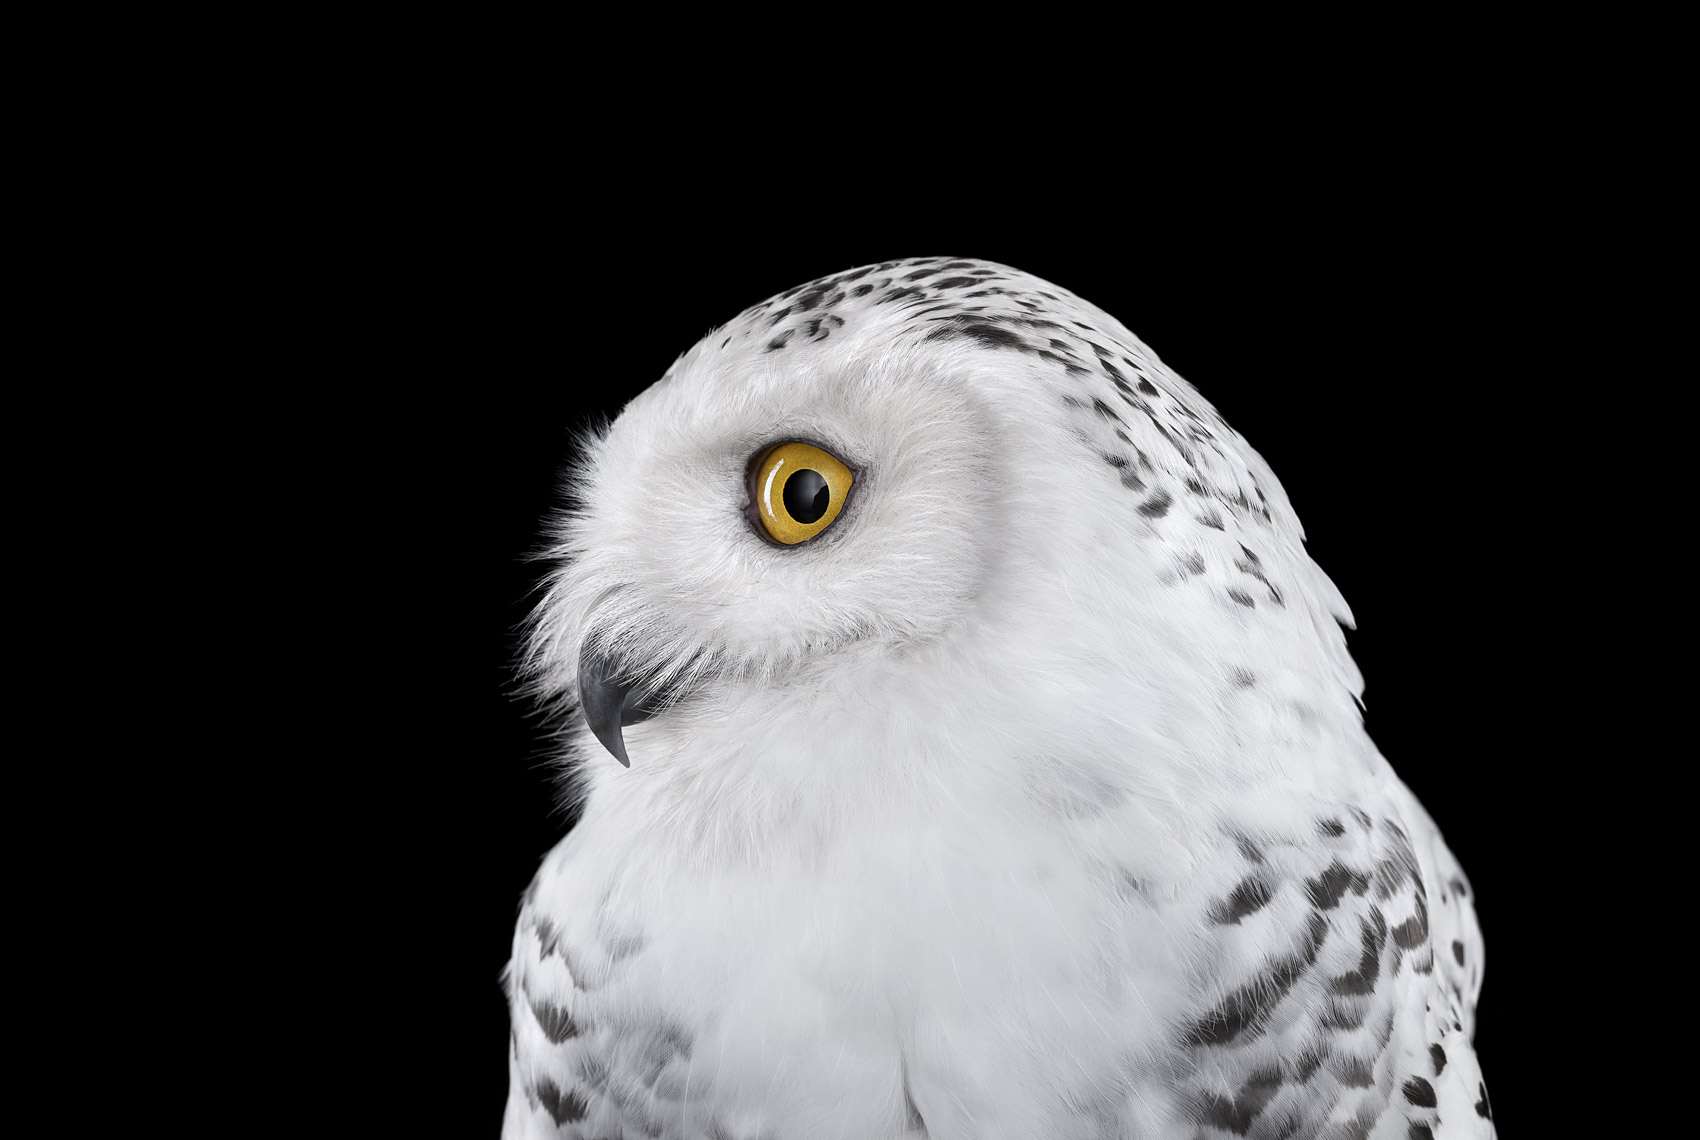 Snowy owl profile portrait by fine art animal photographer Brad Wilson